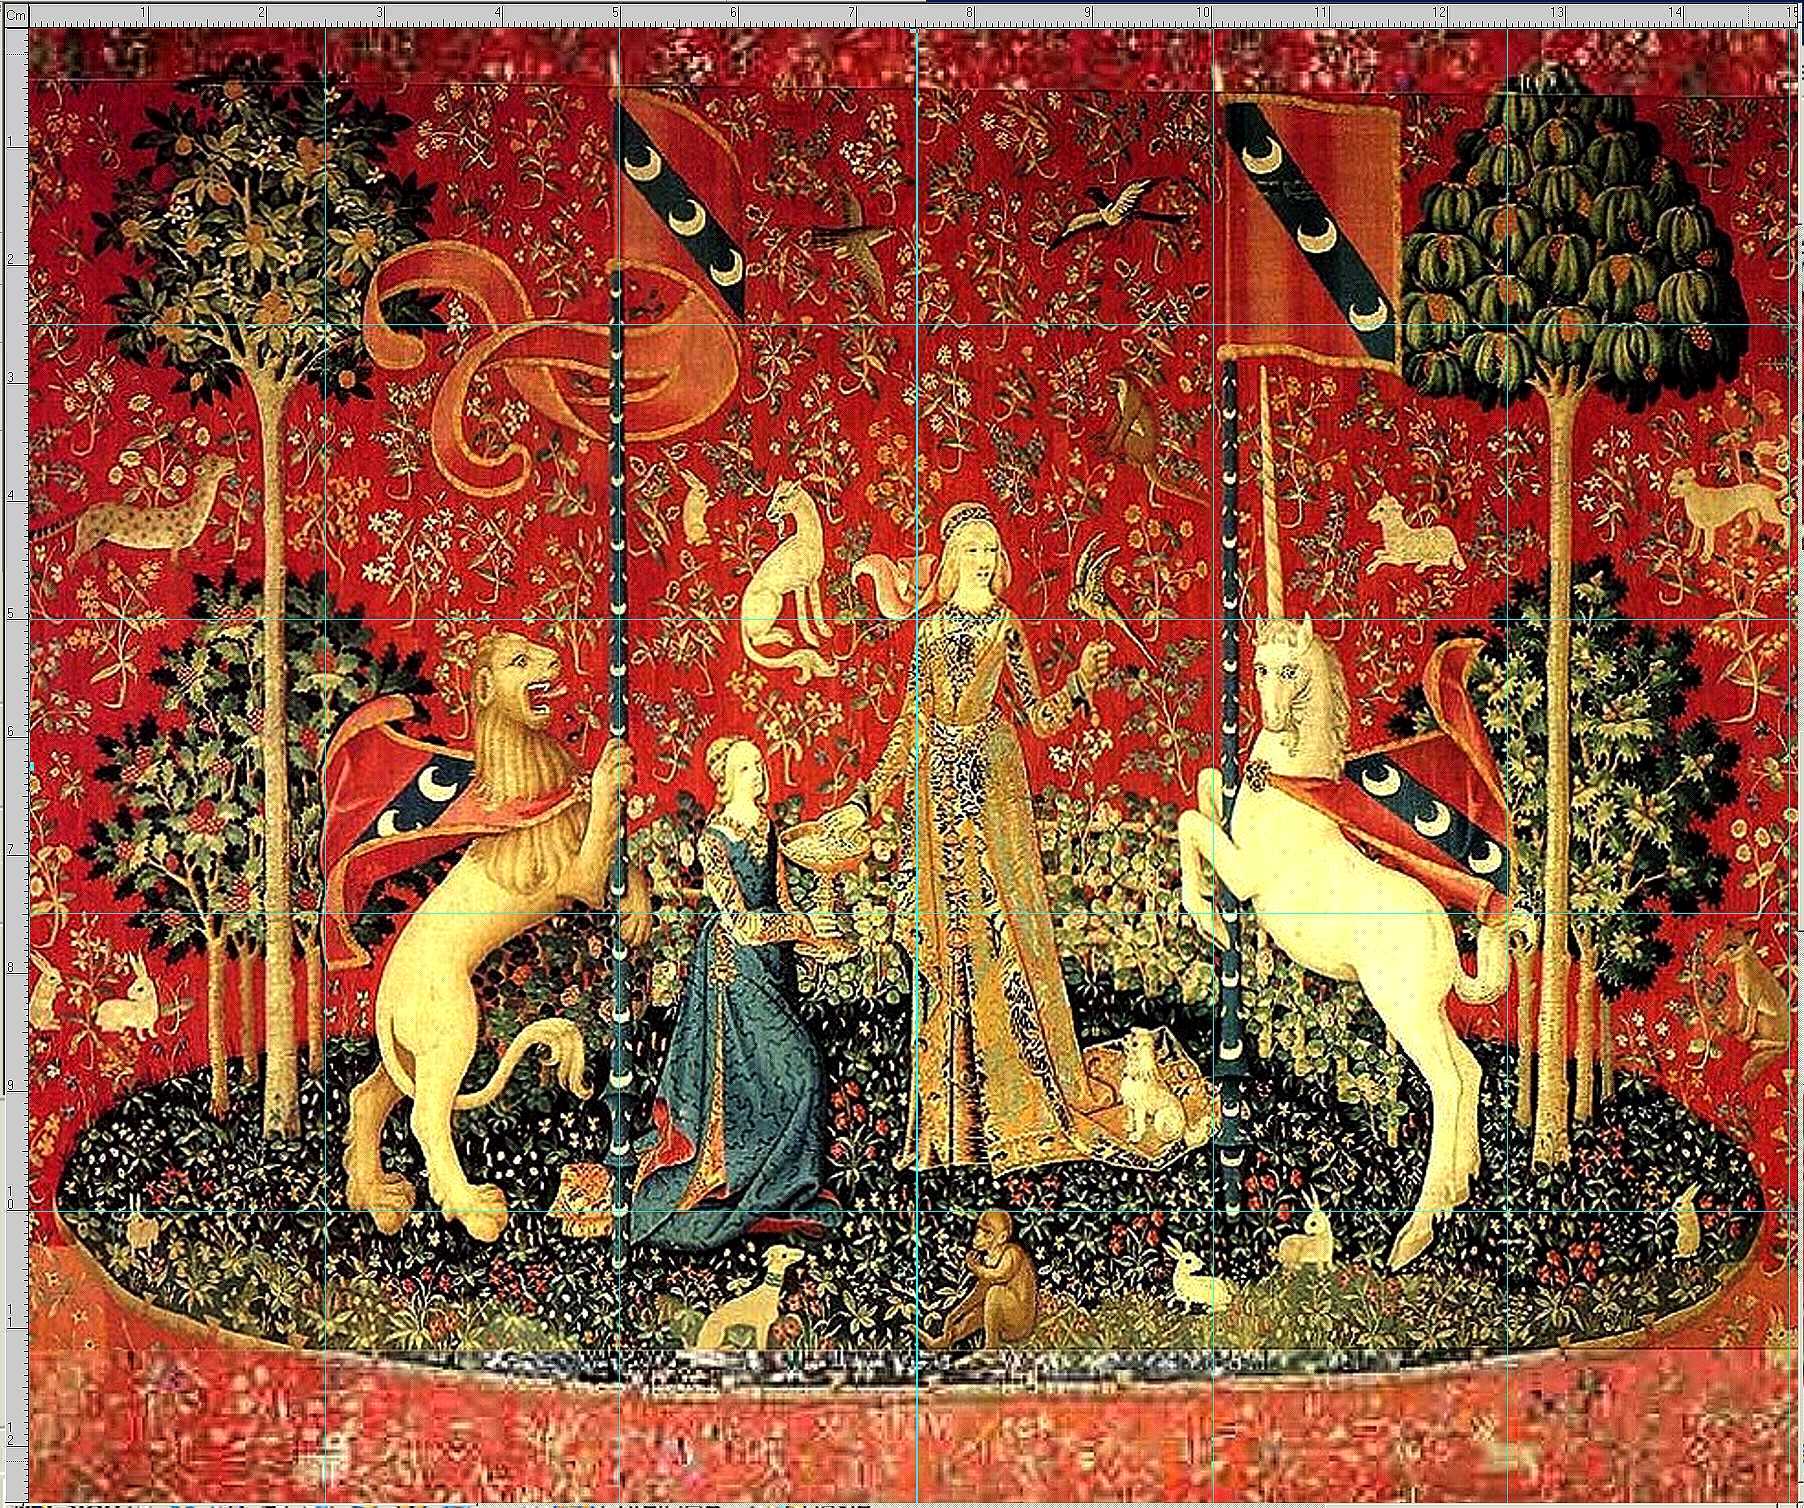 Popular Tapestry Designs | Royal Furnish